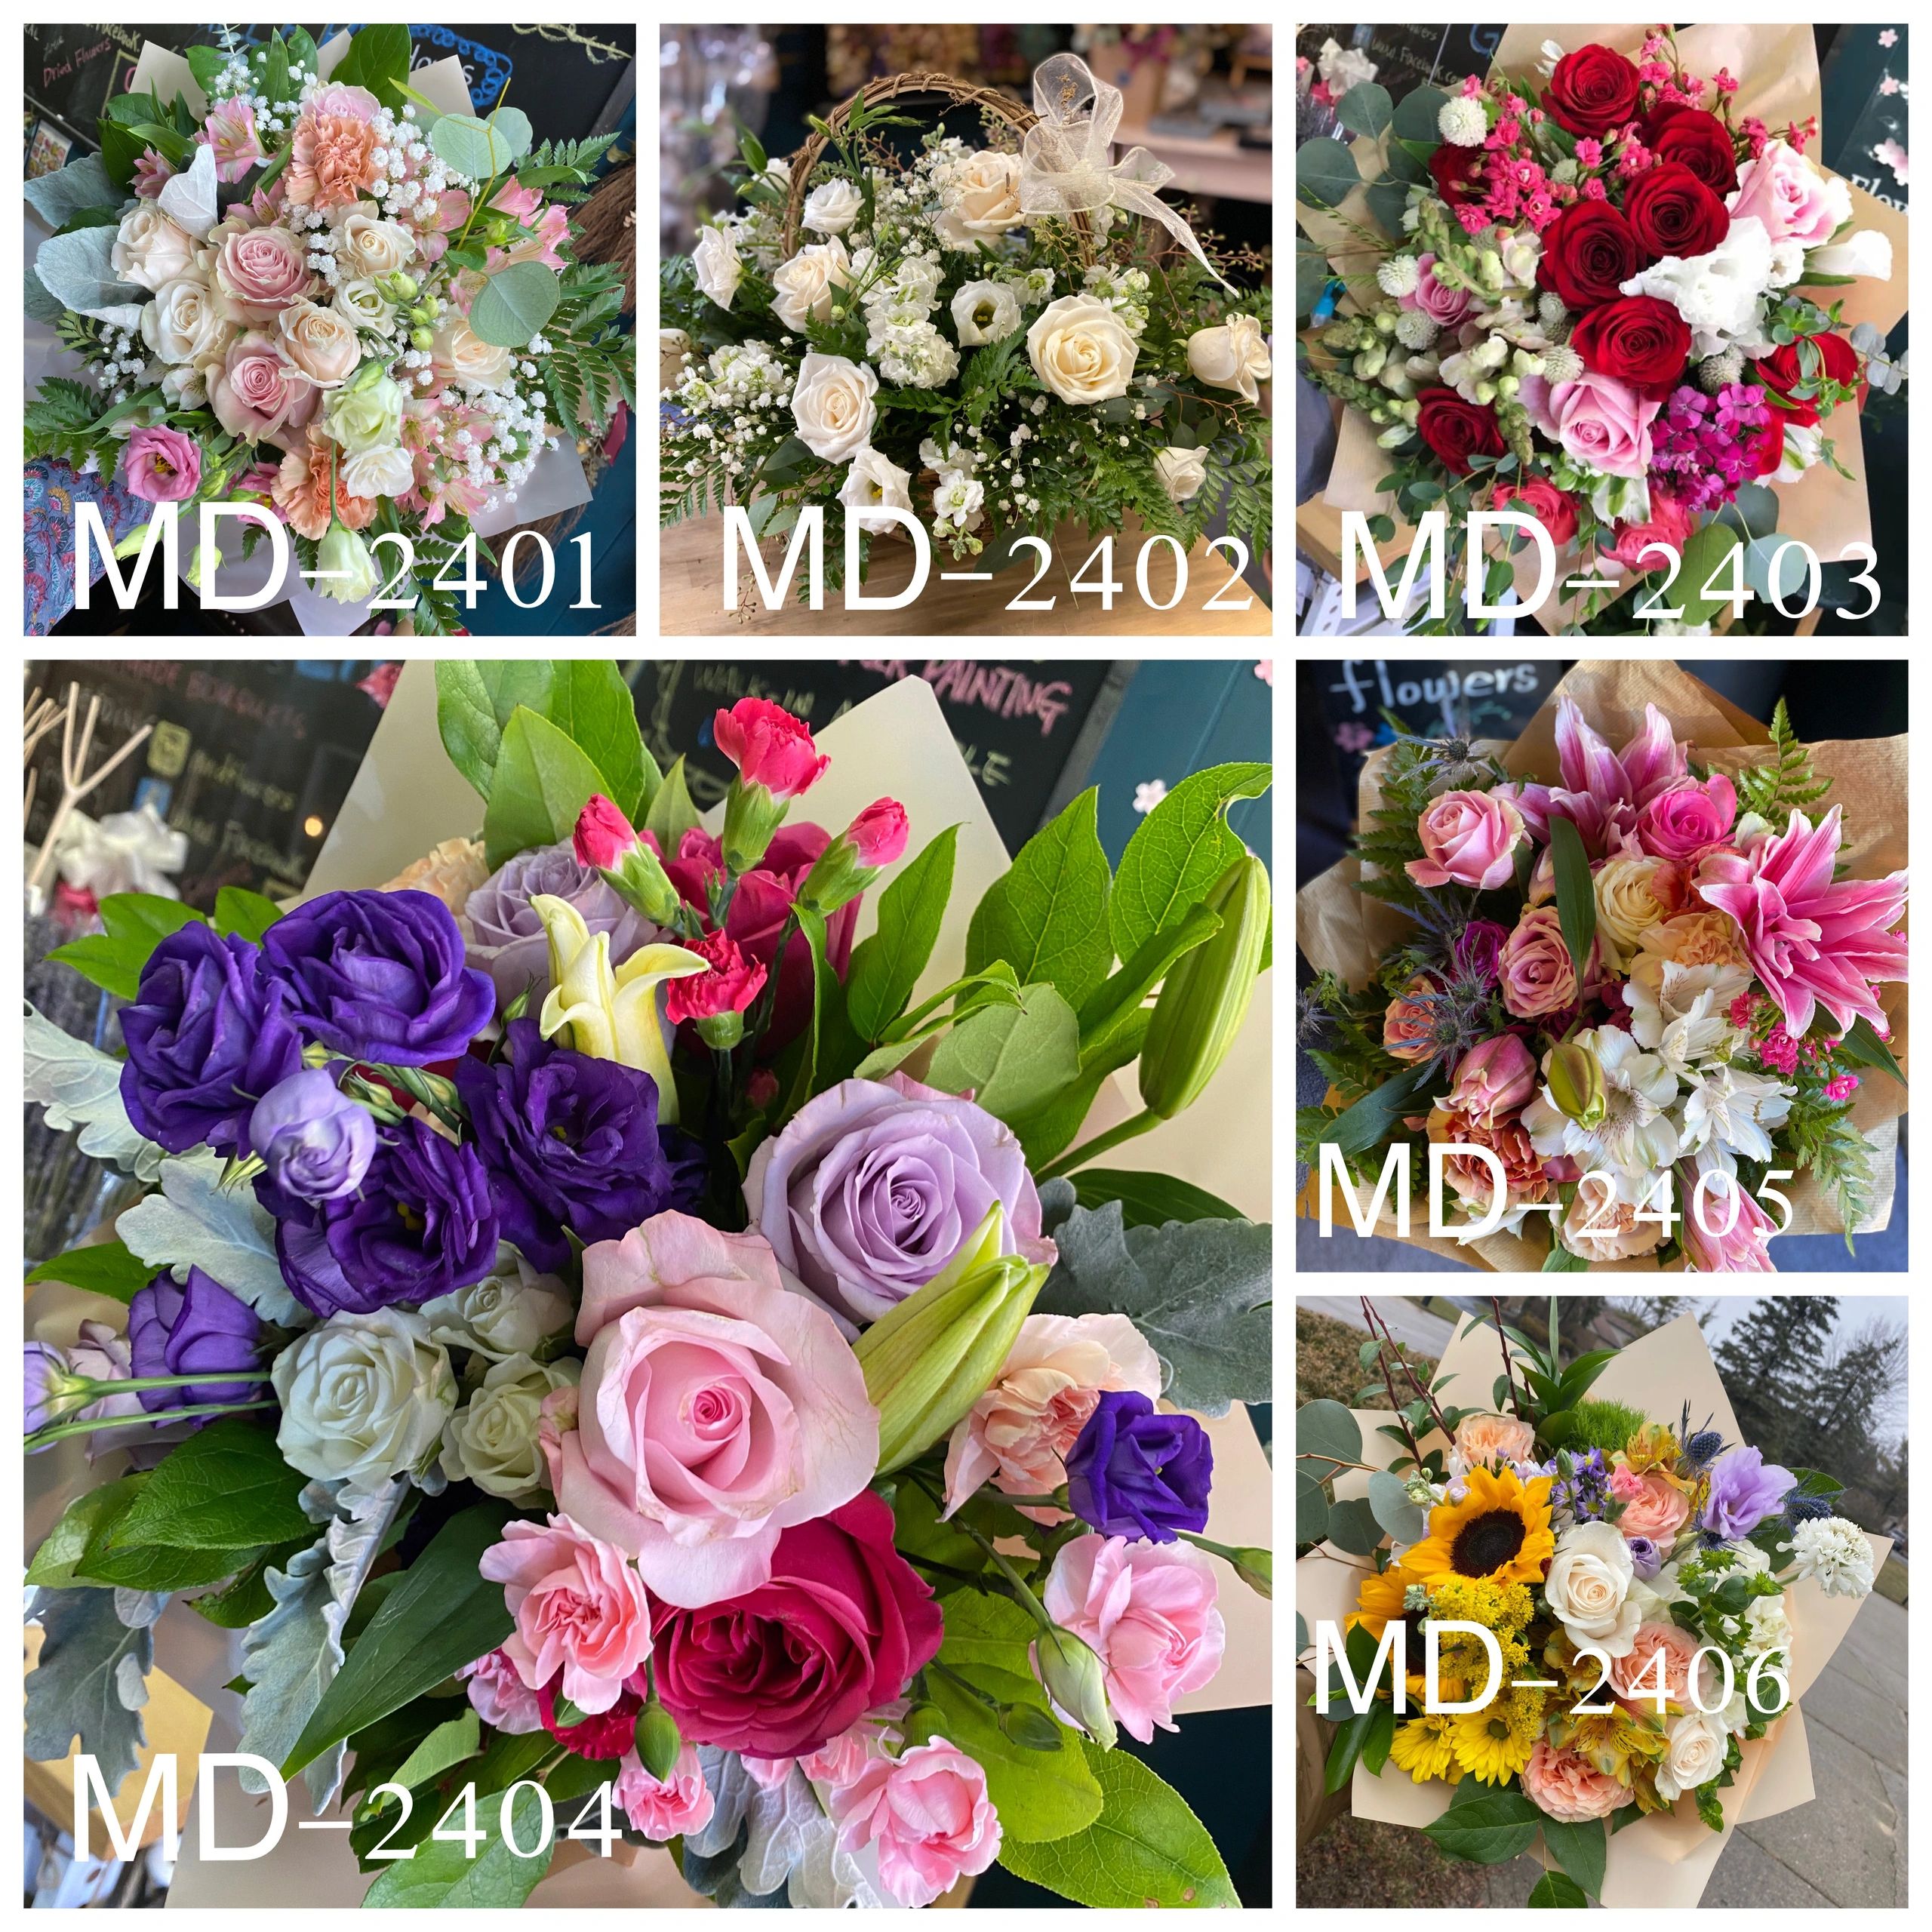 M&D FLOWERS - Flower, Flower Delivery, Flower Shop